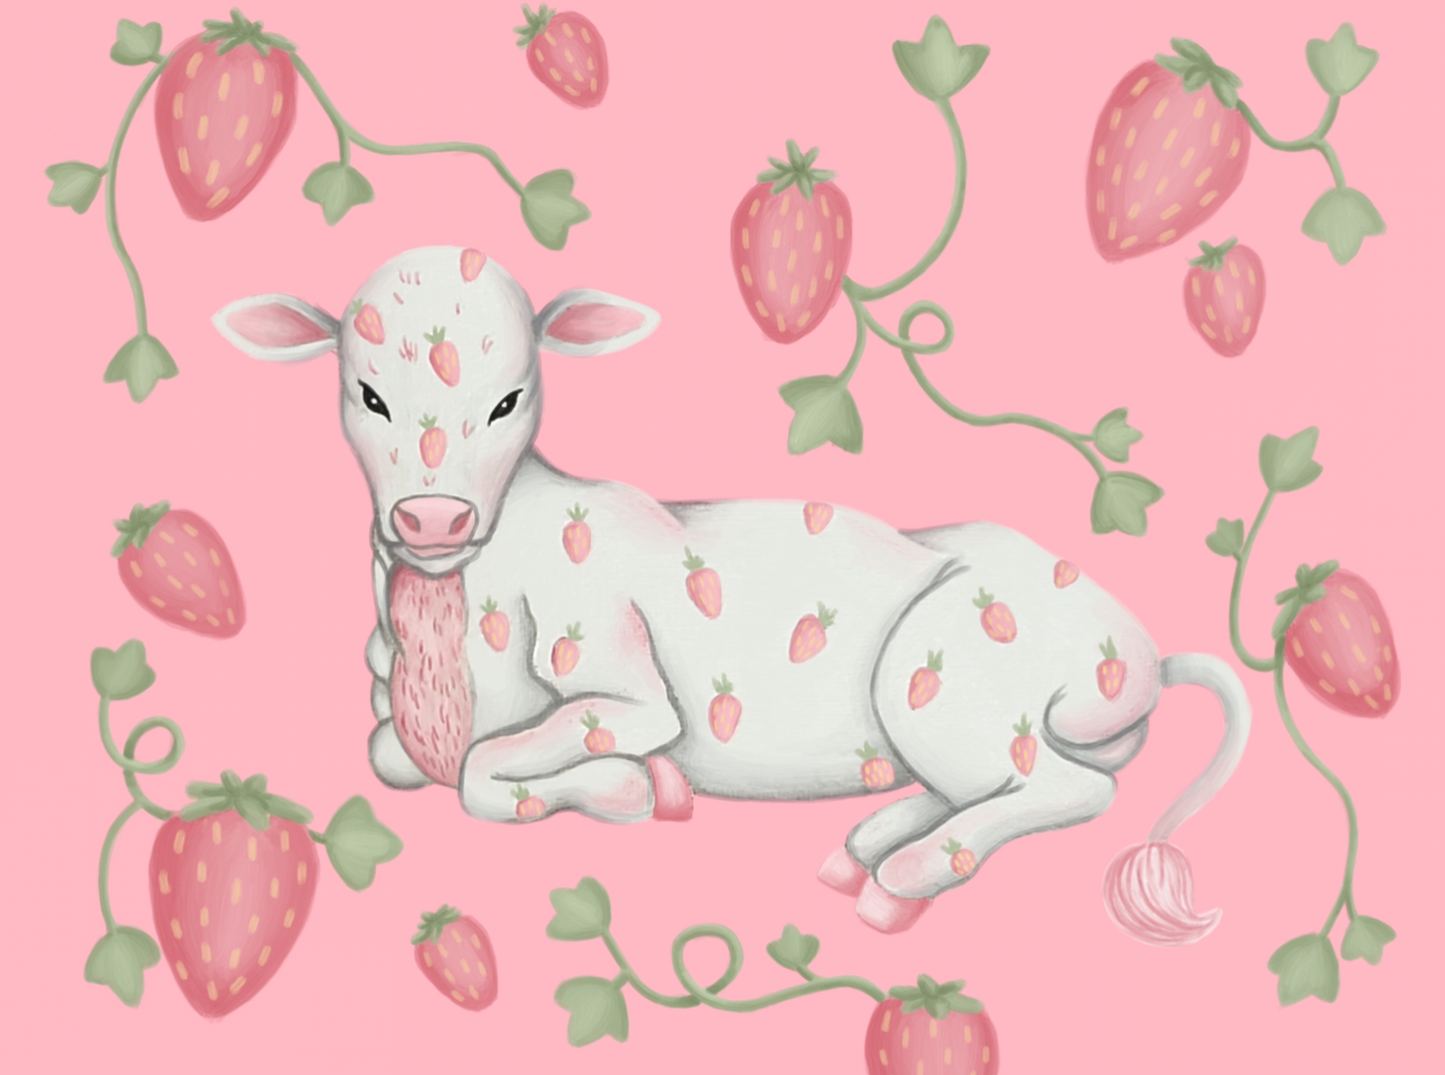 Strawberry Cow Prints